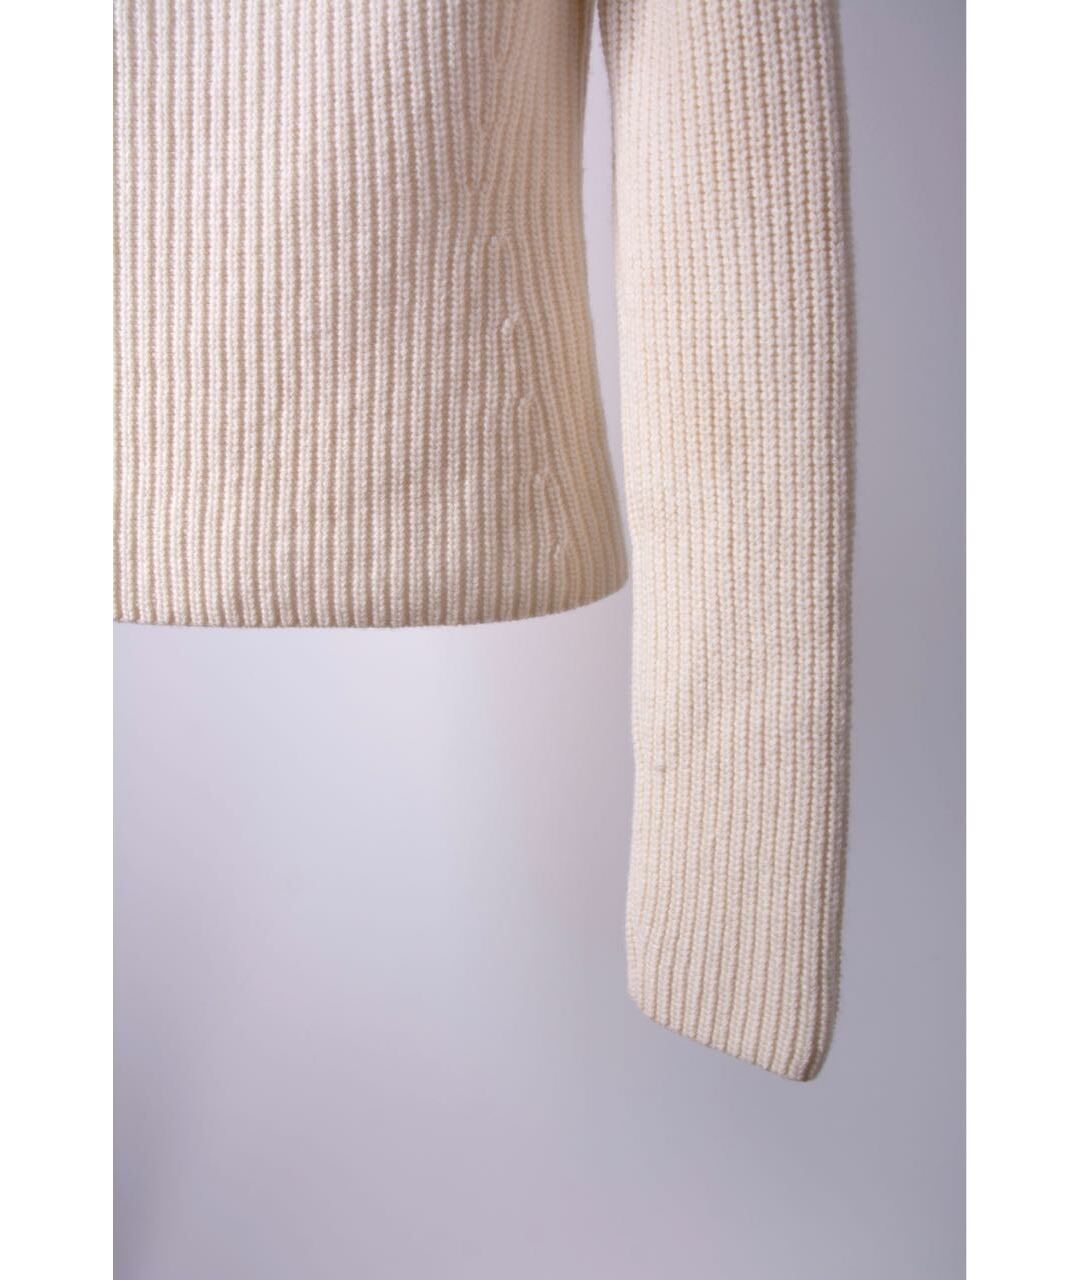 CHRISTIAN DIOR PRE-OWNED Белый шерстяной джемпер / свитер, фото 7